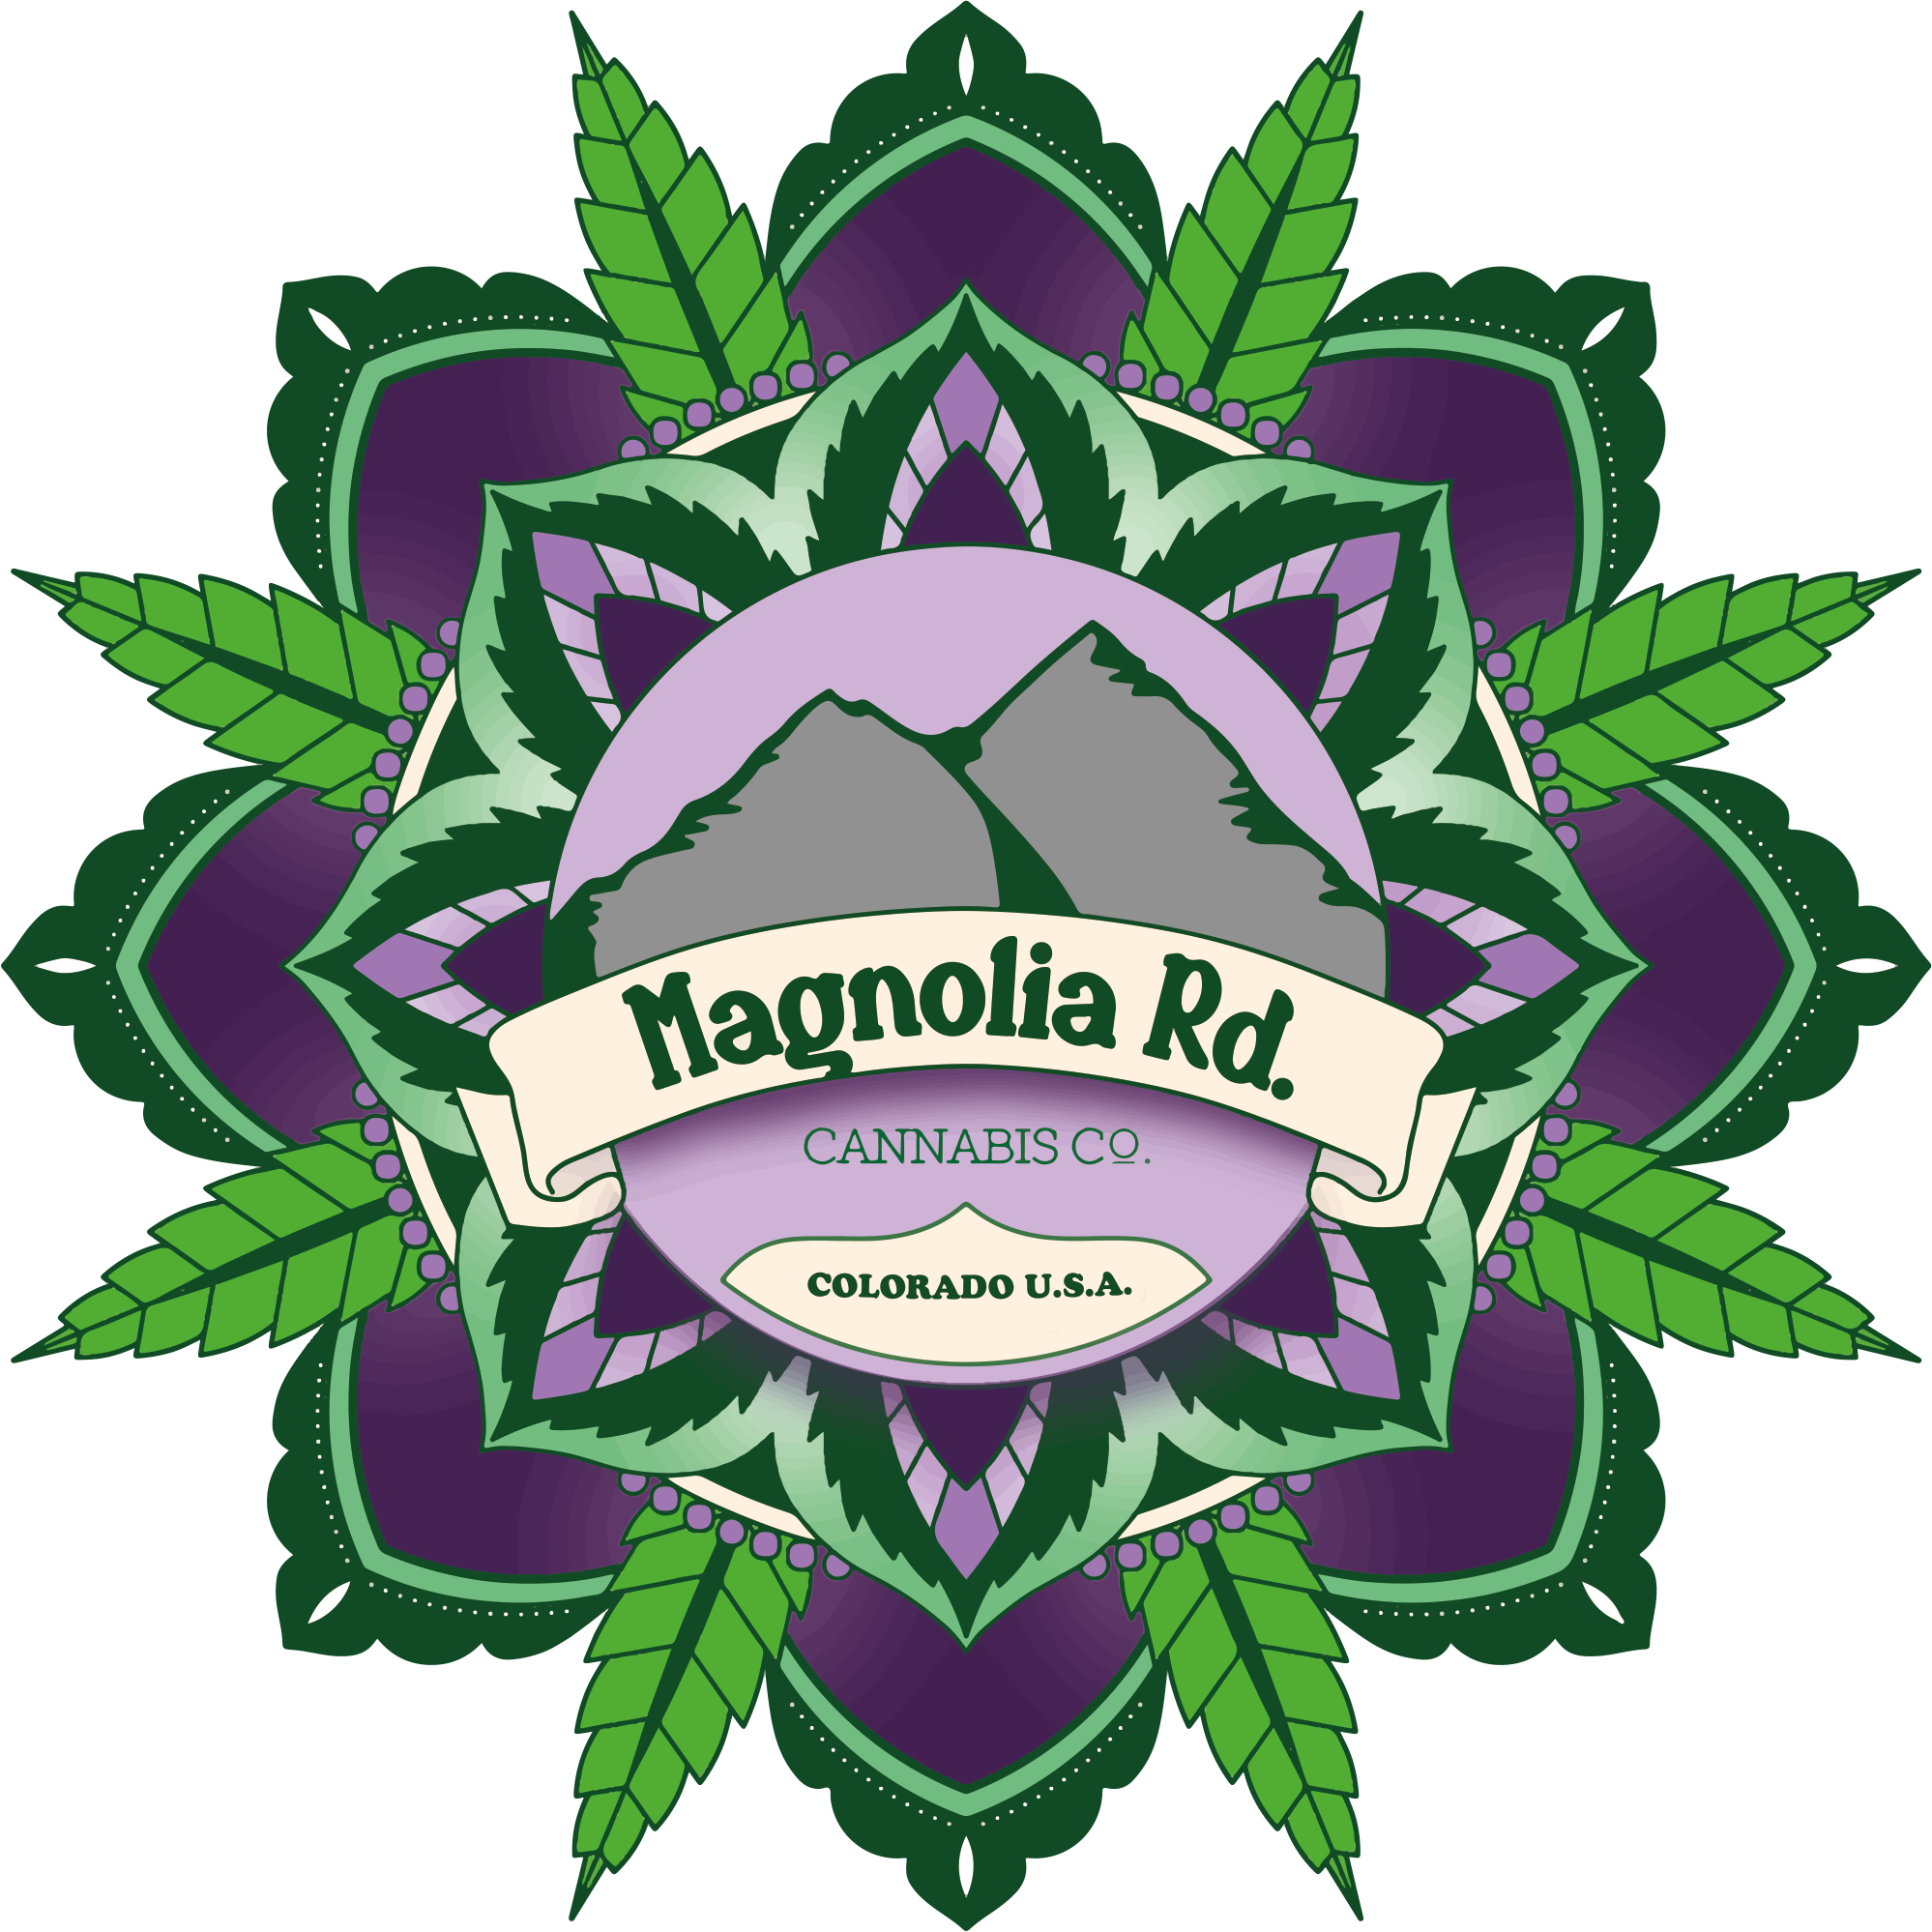 Magnolia Road Cannabis Co. - Log Lane Village logo